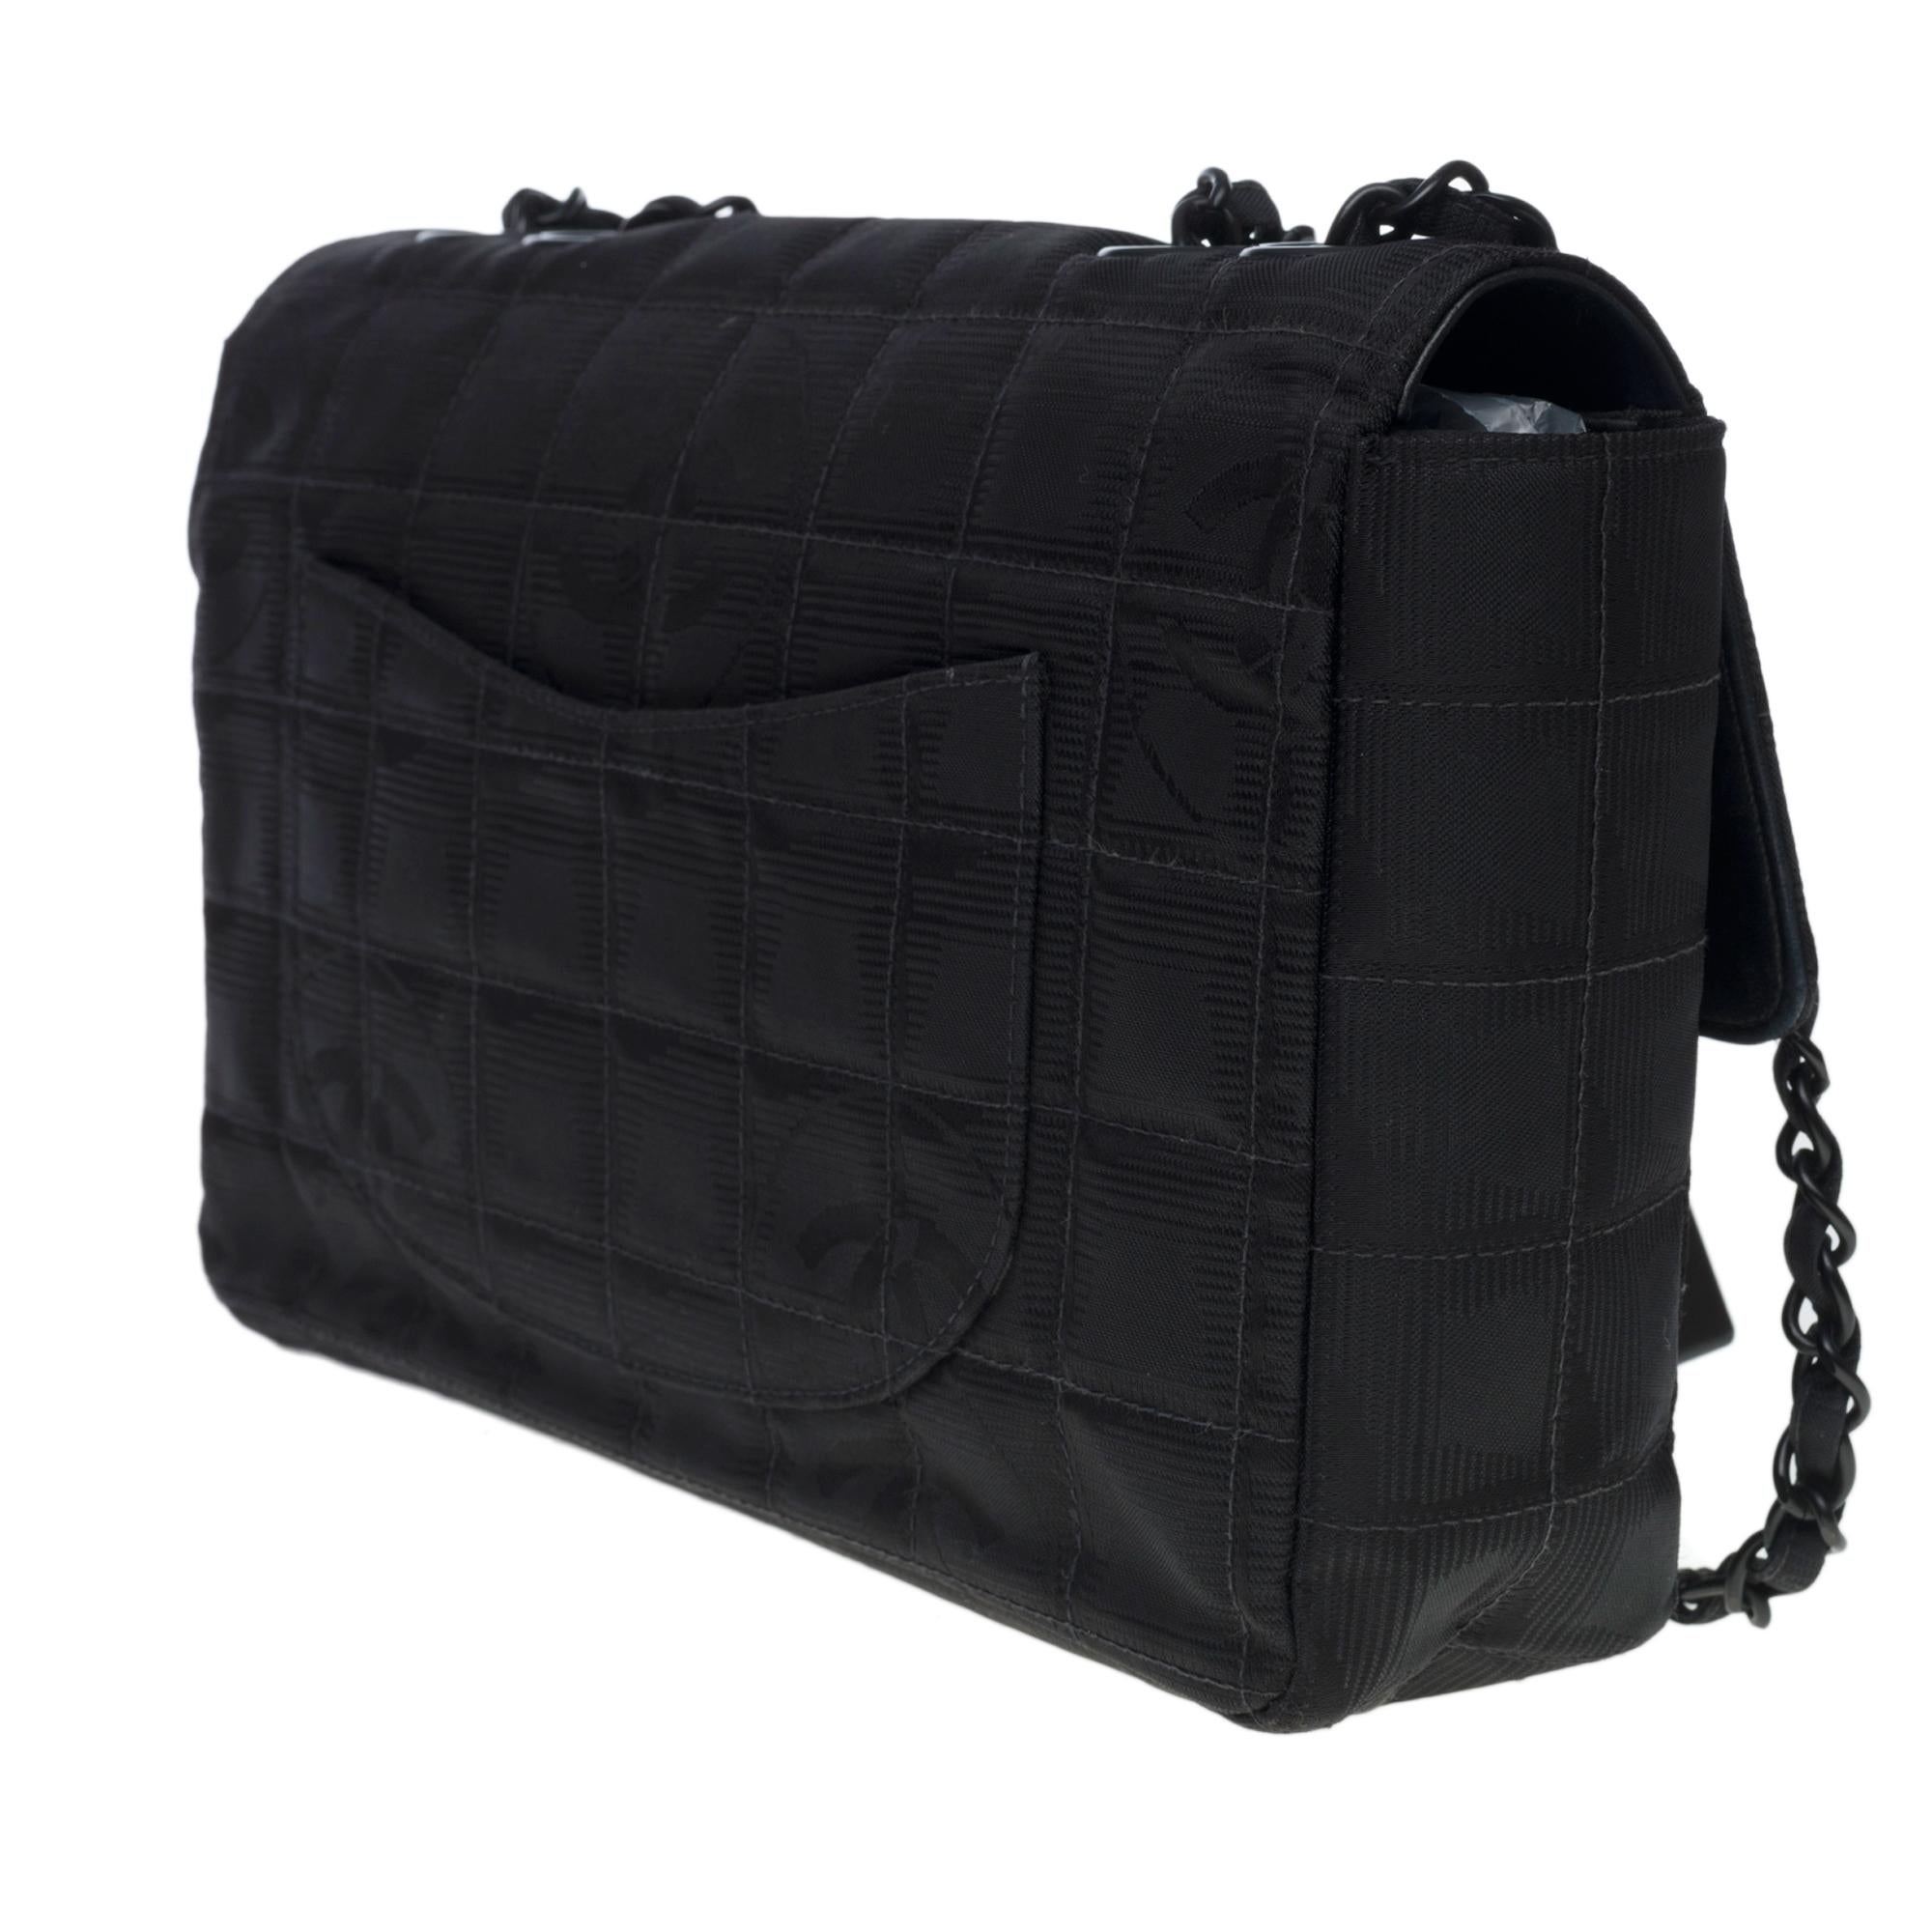 Black Chanel Timeless/Classic Travel Line flap bag in black nylon, black hardware